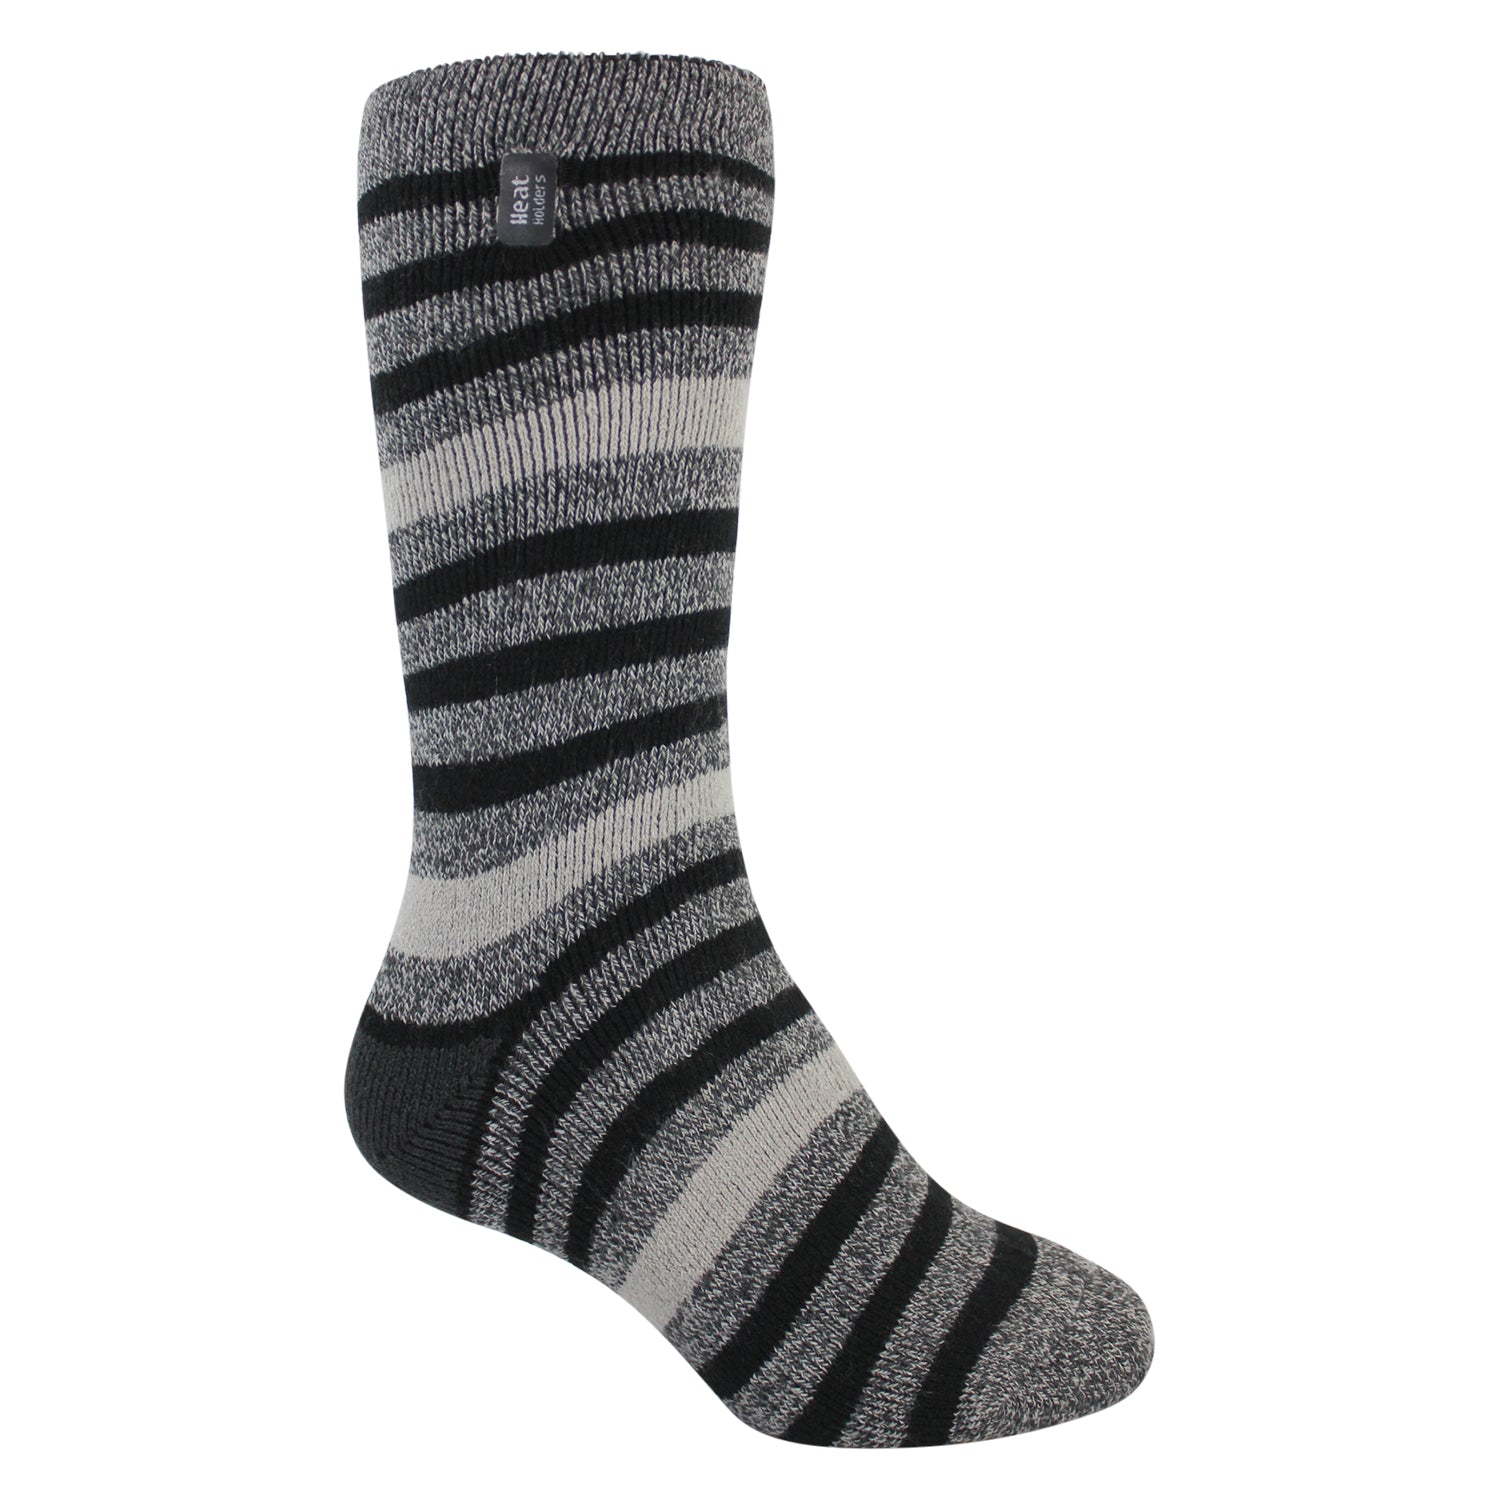 HEAT HOLDERS UK Lite Thermal Socks - Mens Size 6-11